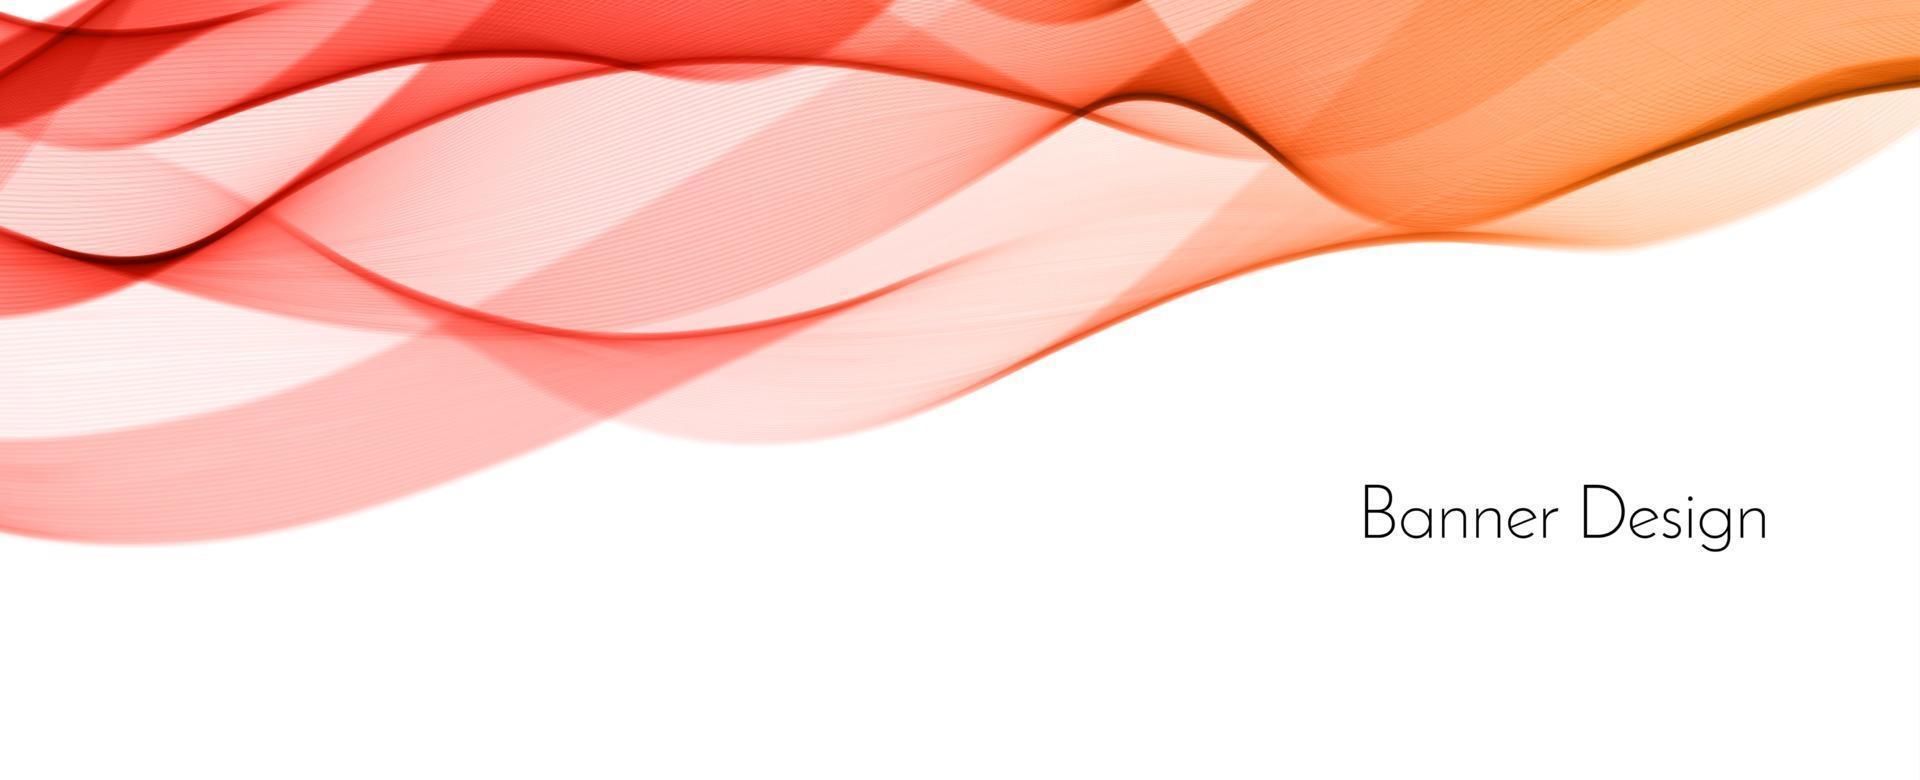 Fondo de banner de onda elegante decorativo moderno rojo abstracto vector